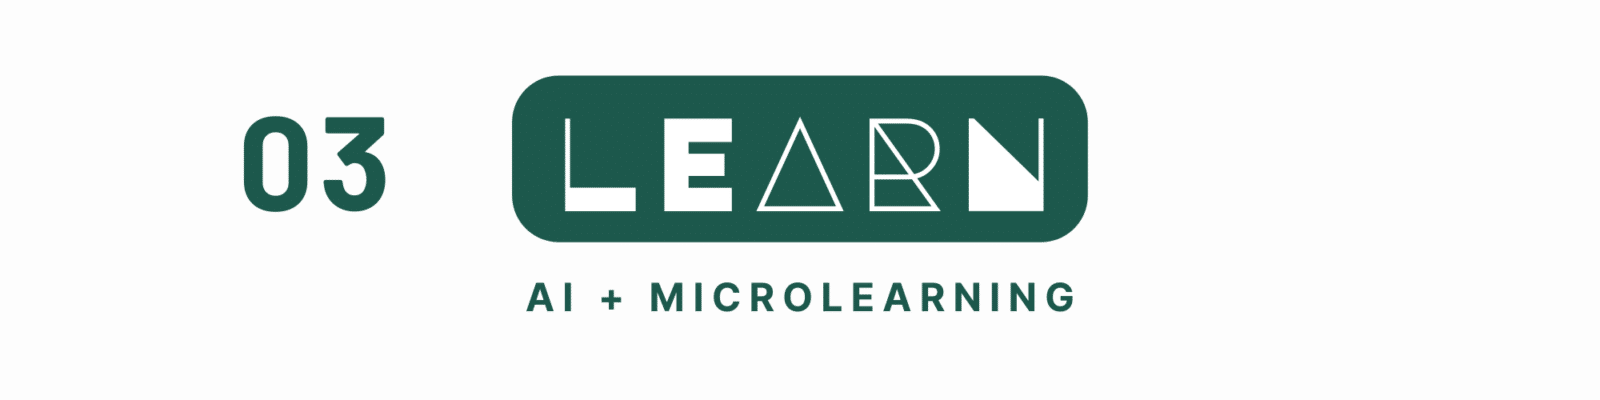 Learn: AI + Microlearning Modules Header